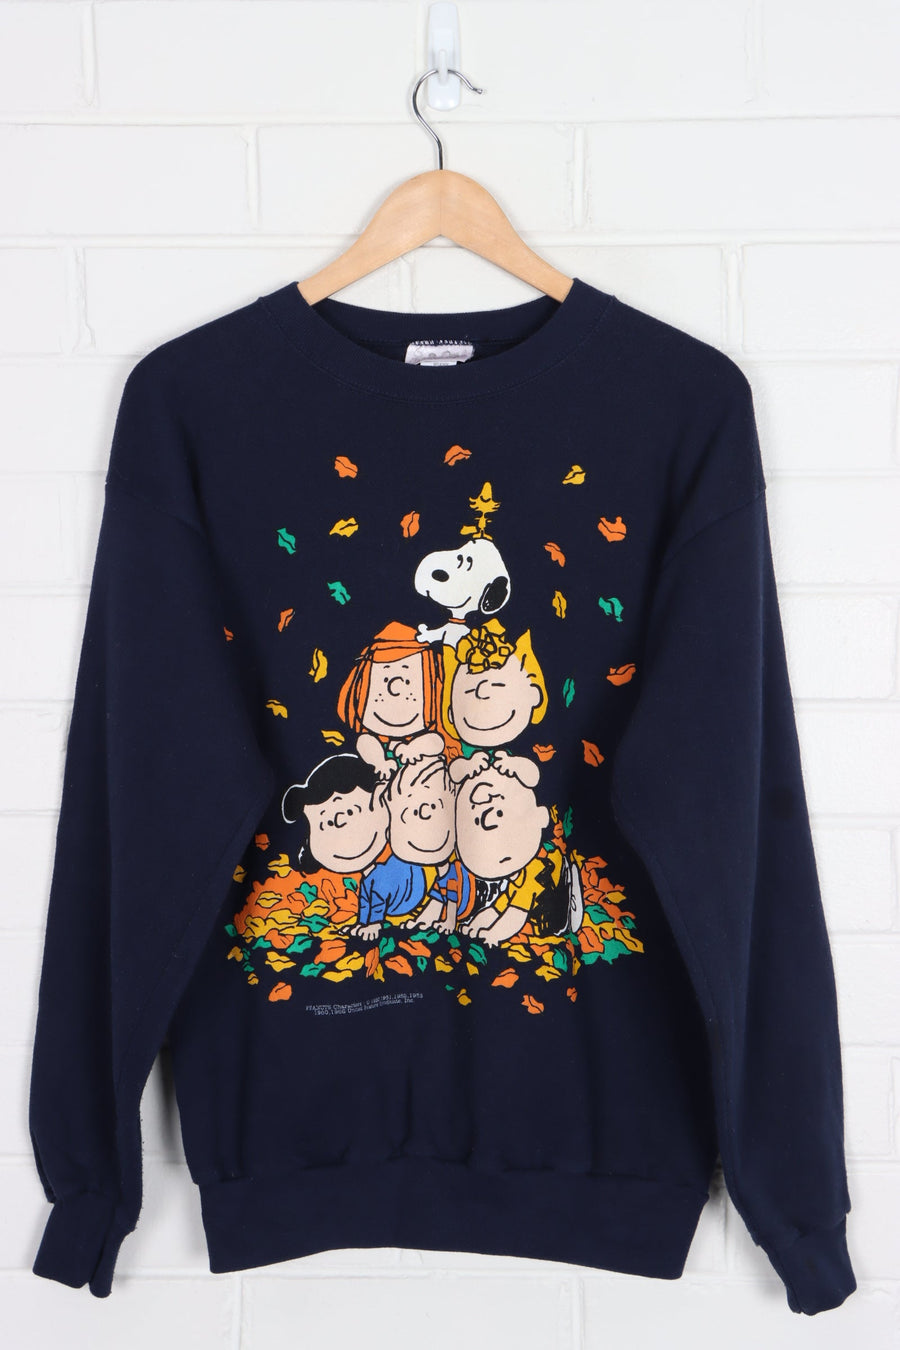 Peanuts Snoopy & Friends Autumn Leaves Sweatshirt USA Made (S-M)